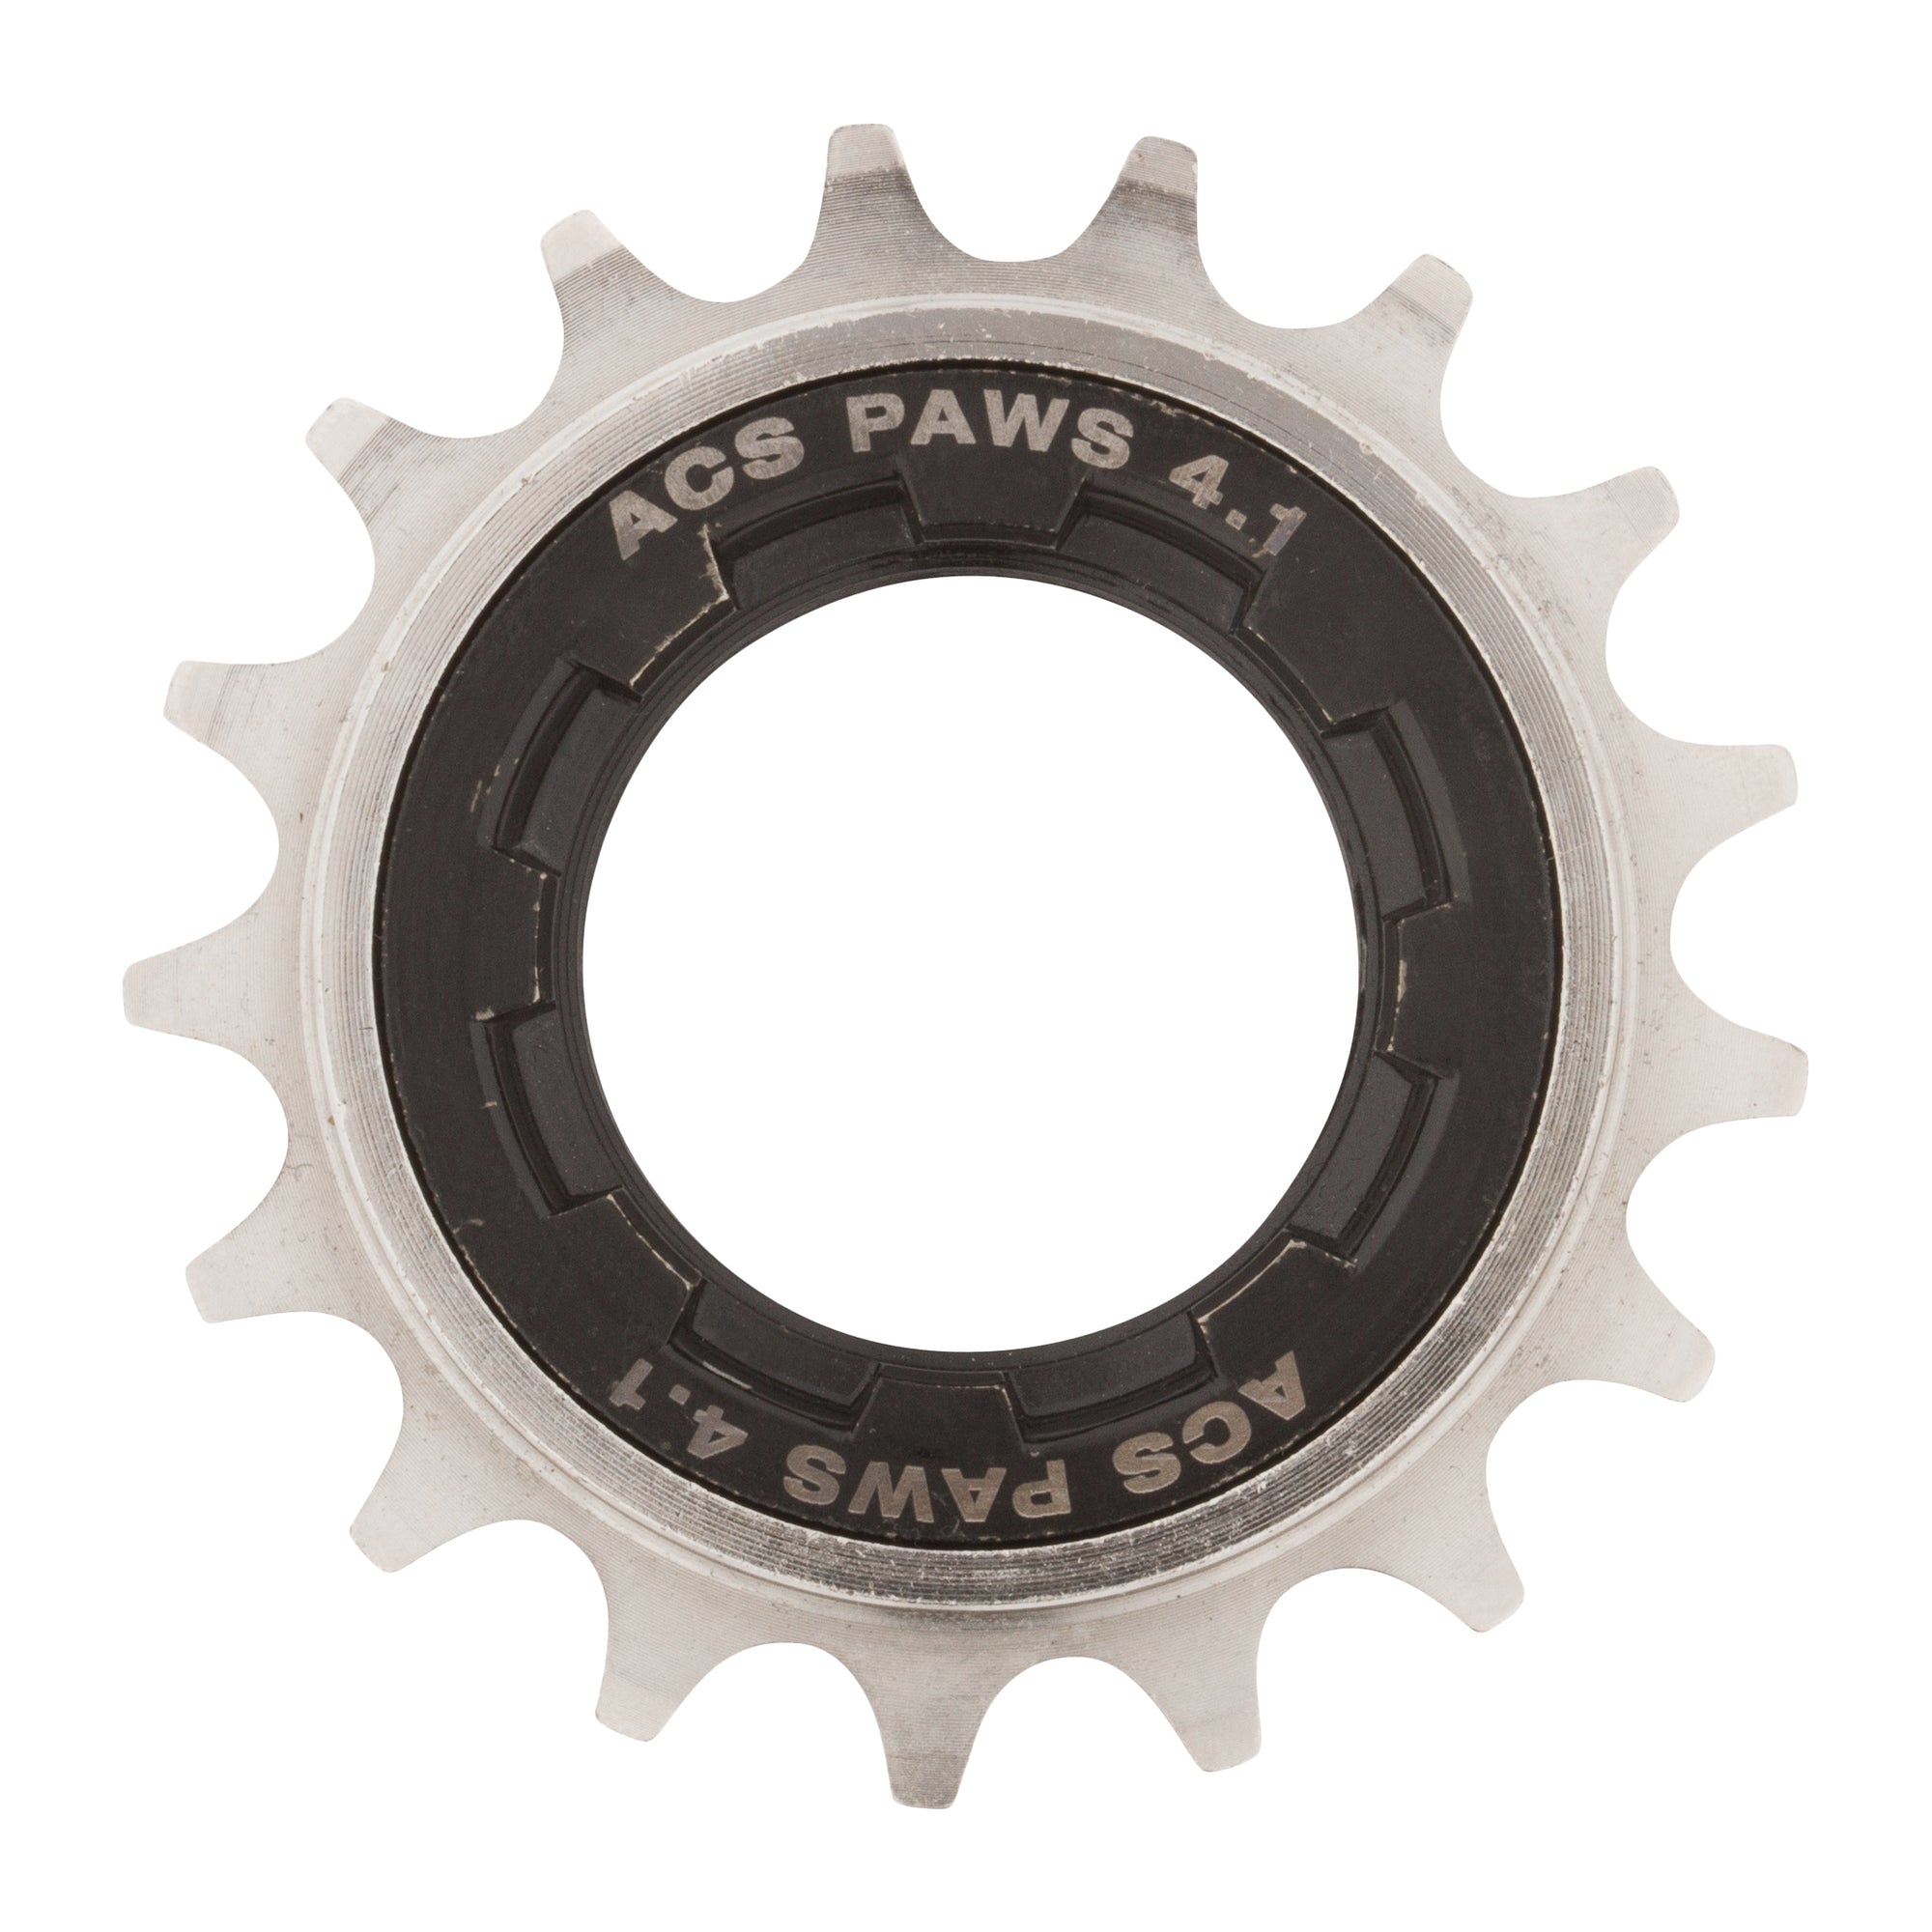 ACS Paws 4.1 17t BMX Freewheel - 1/8" & 3/32" - Black/Nickel